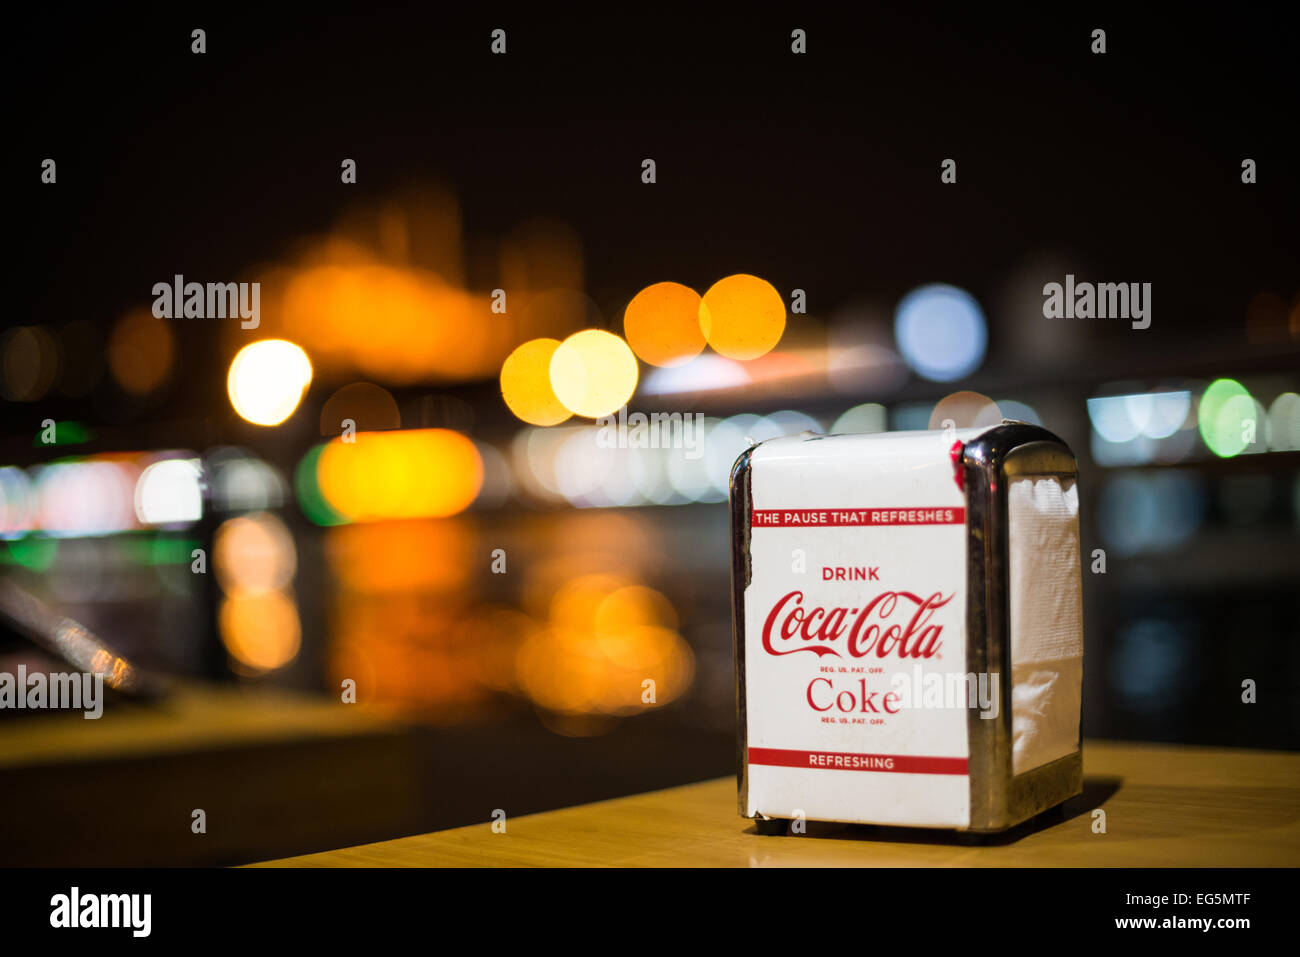 Coca cola -Fotos und -Bildmaterial in hoher Auflösung – Alamy